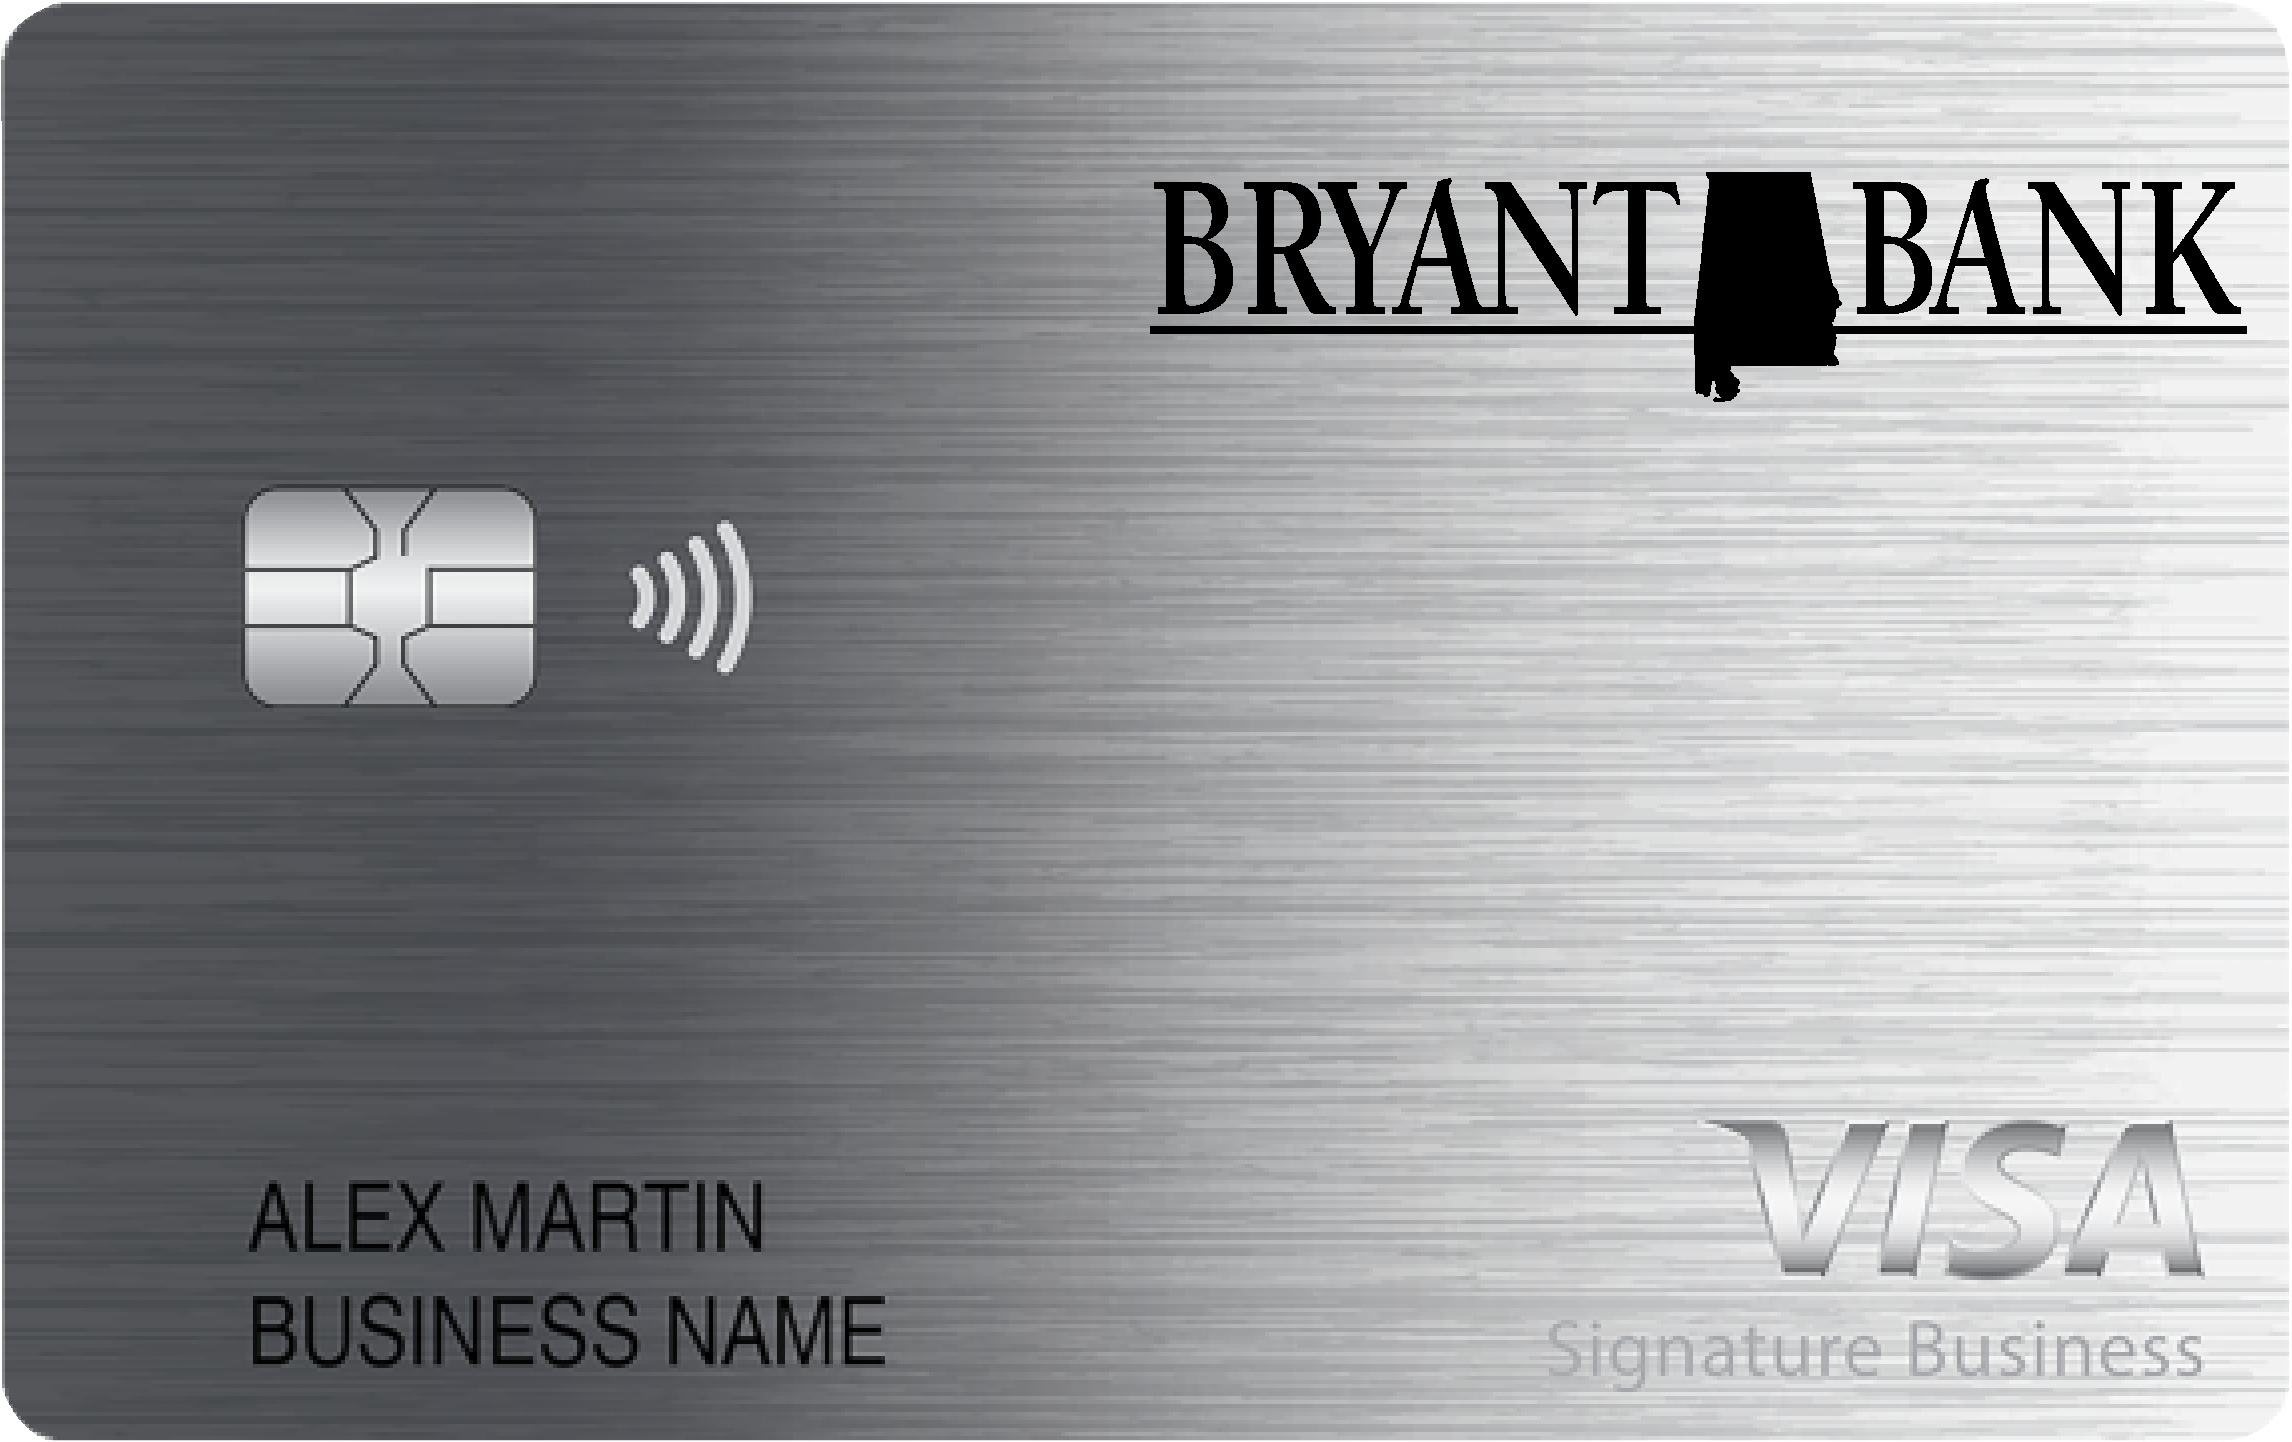 Bryant Bank Smart Business Rewards Card